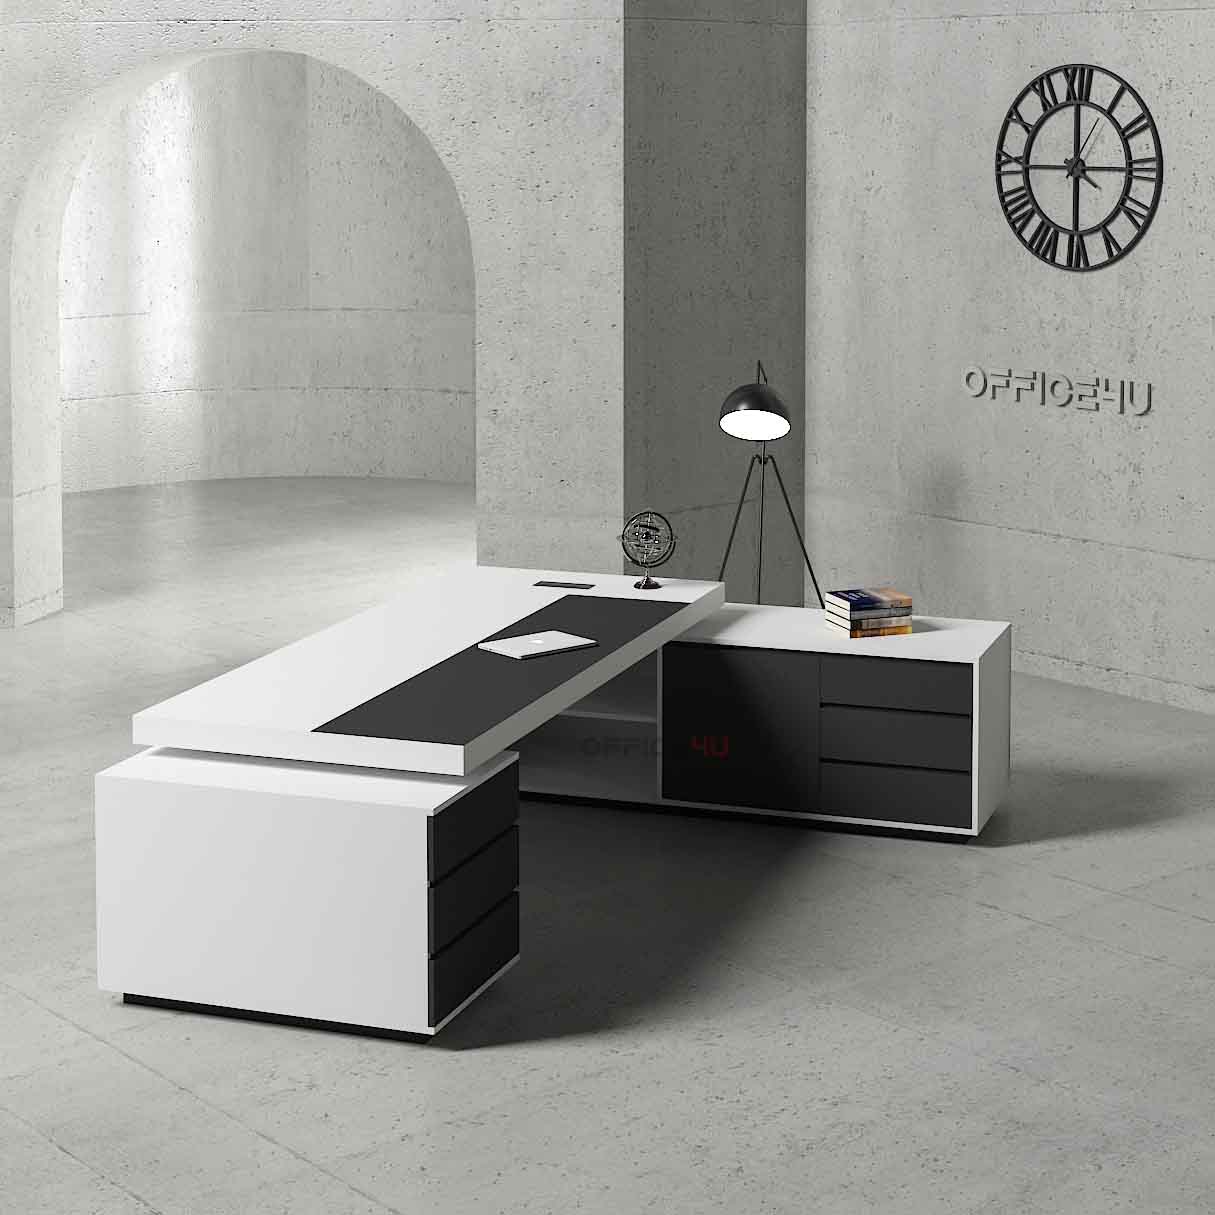 large-executive-desk-02